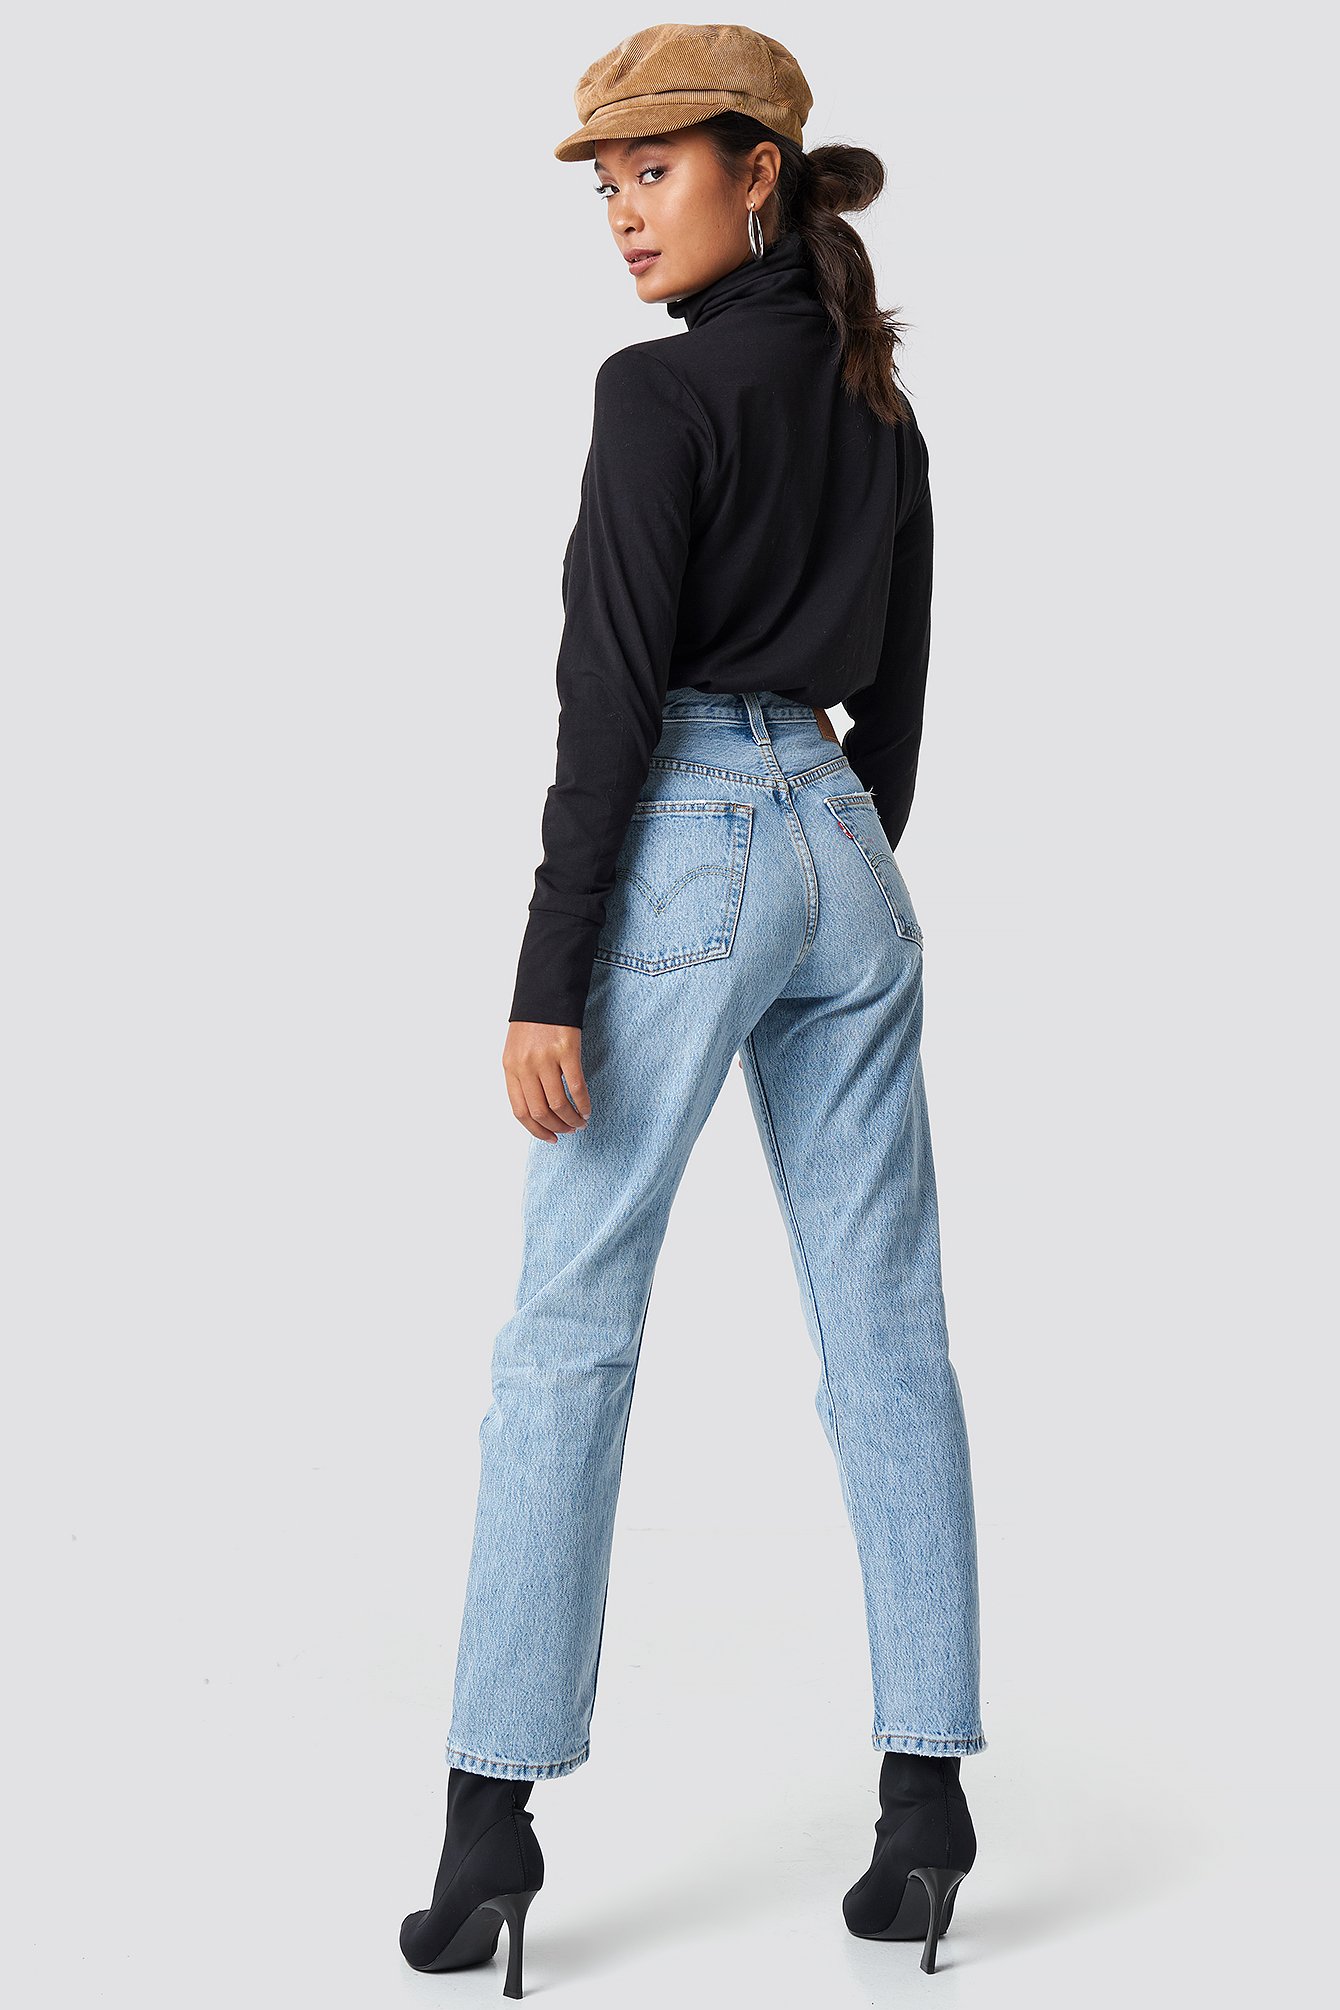 levi's 501 high waisted jeans